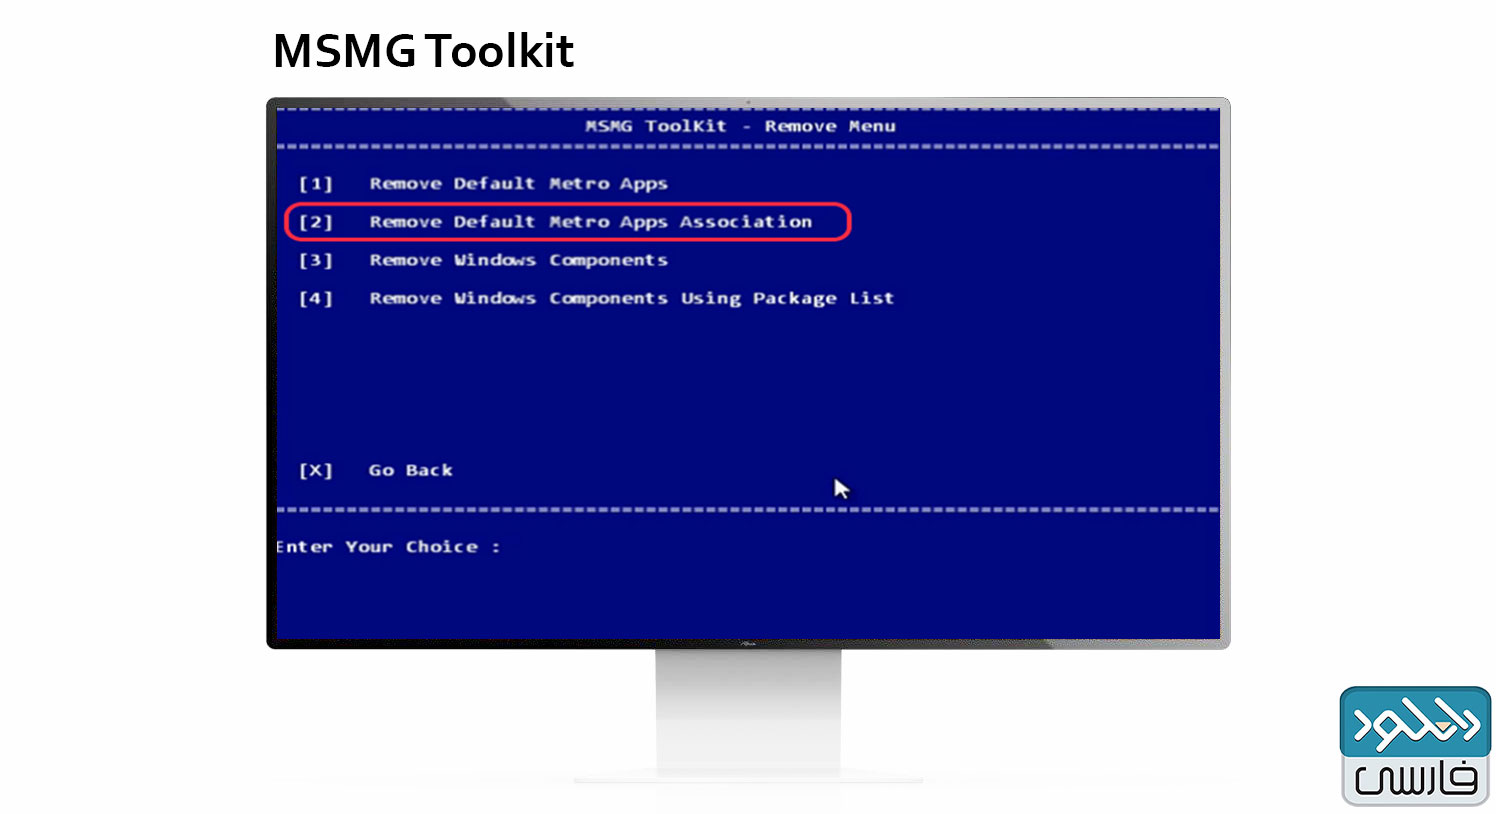 msmg toolkit v11.8